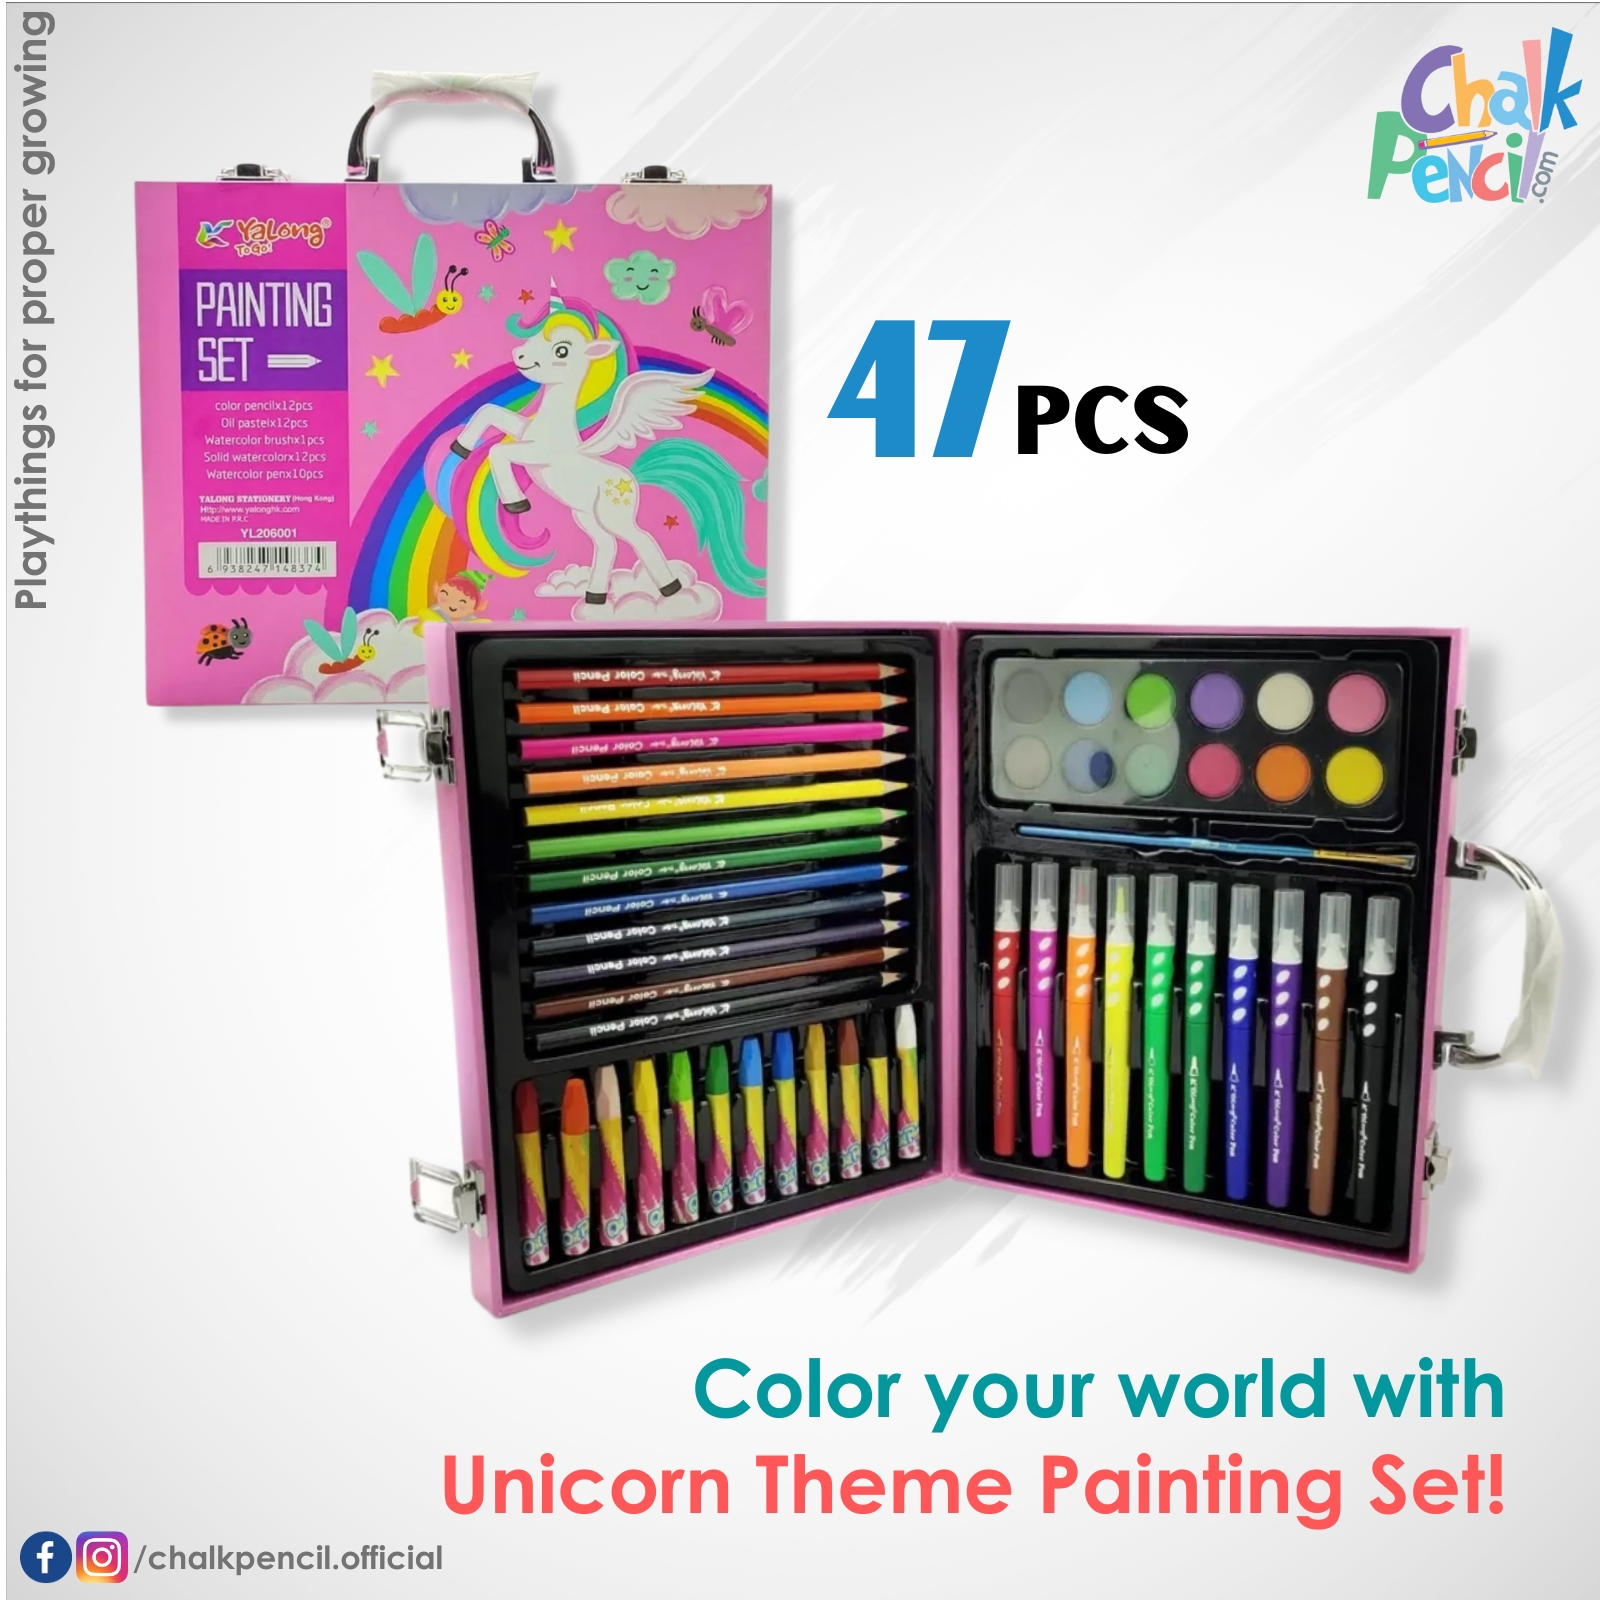 Unicorn Theme Painting Set 47pcs